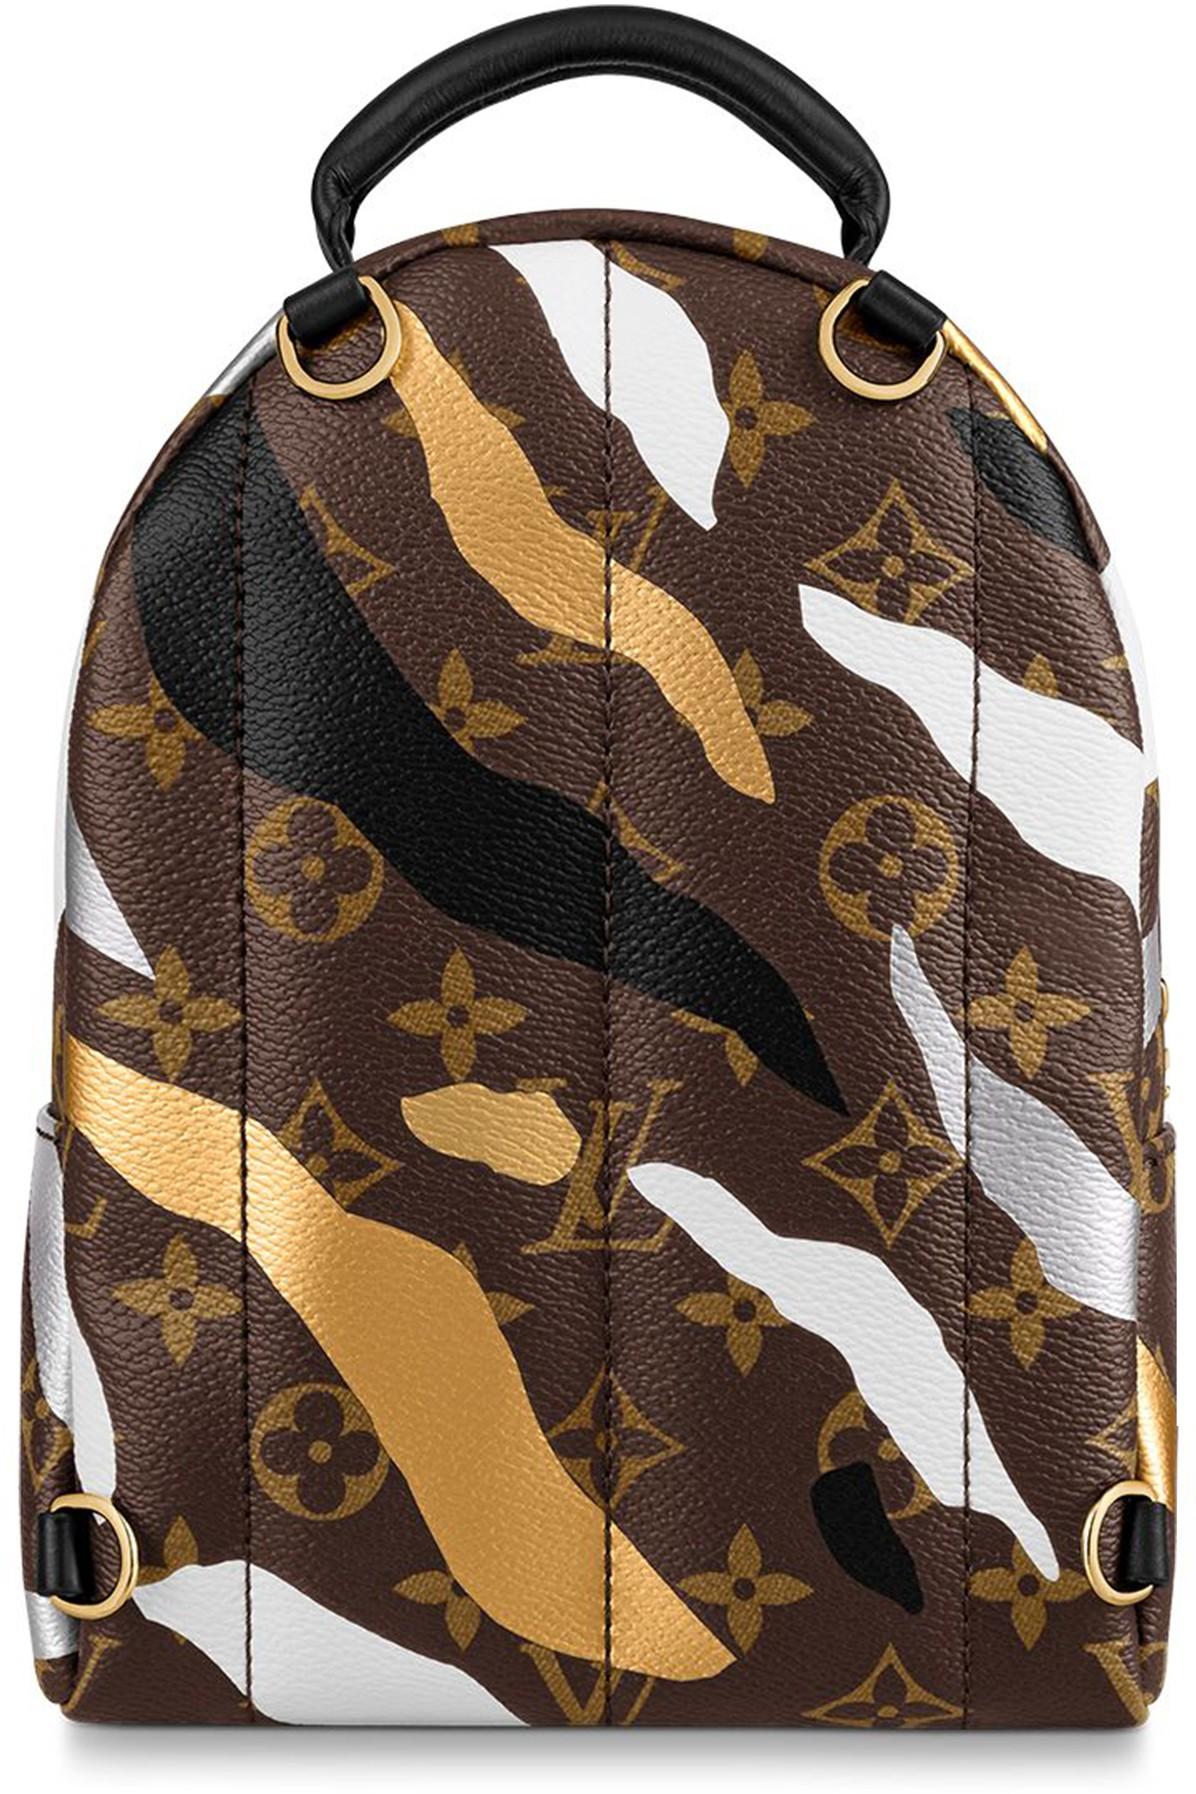 Louis Vuitton Palm Springs Mini Backpack - The Shoe Box